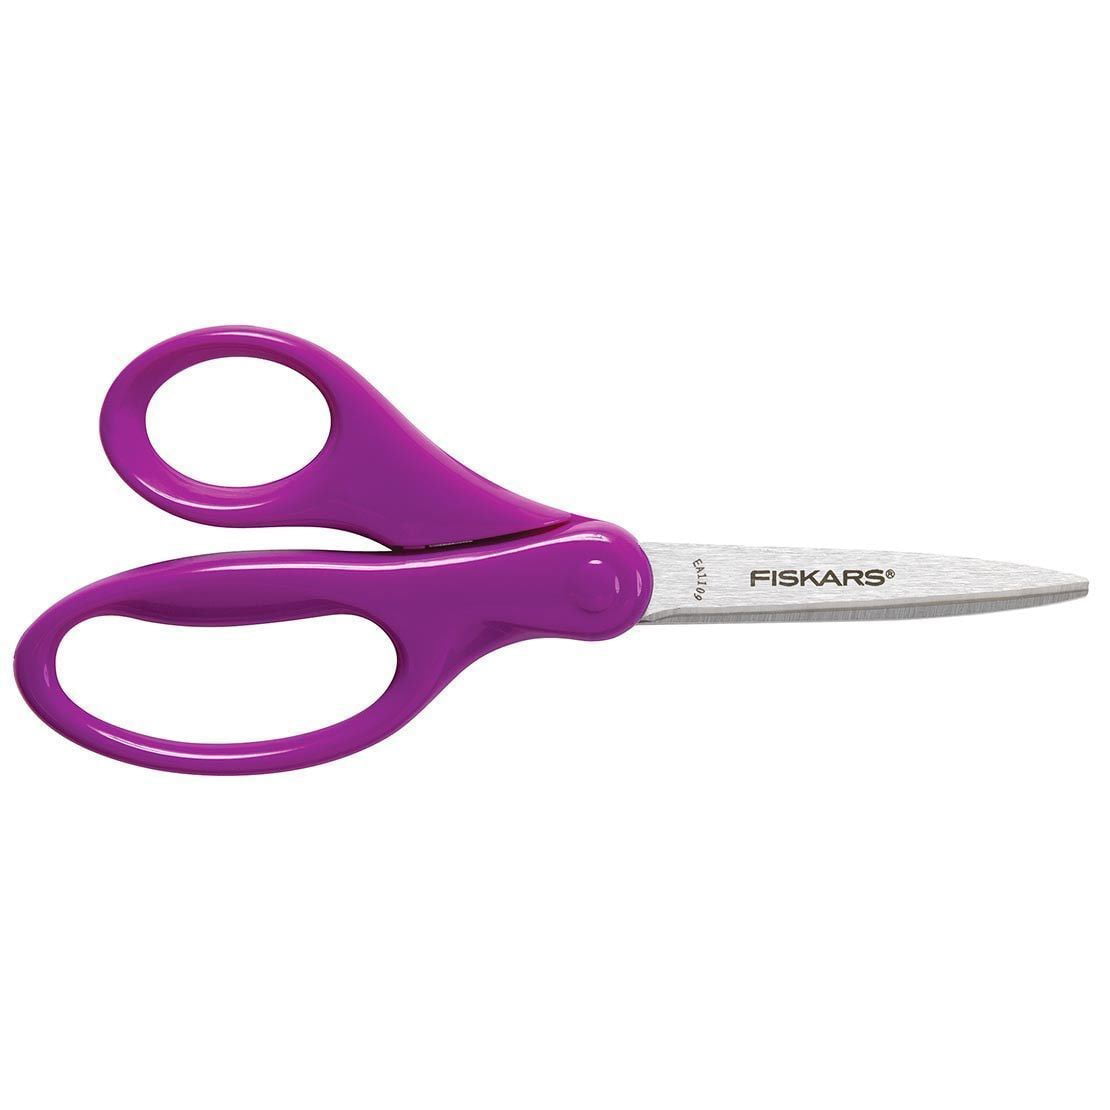 Hygiplas Scissors Purple 205mm - FX128 - Buy Online at Nisbets